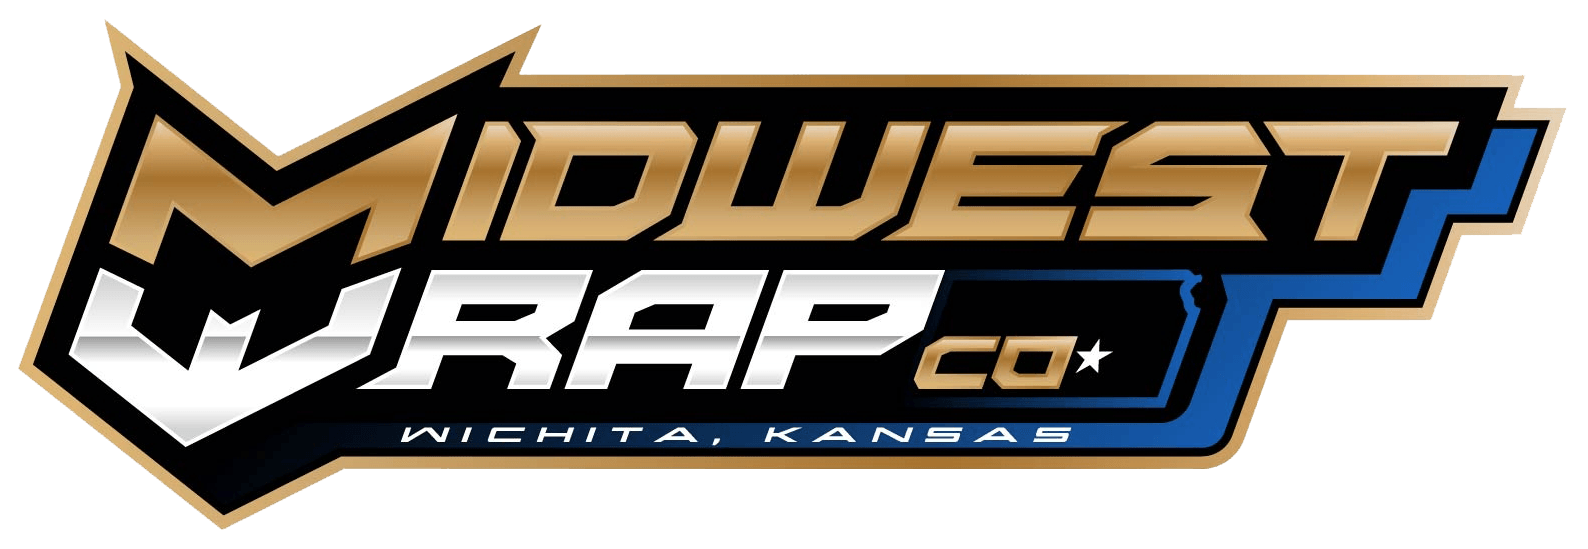 Midwest Wrap Co logo